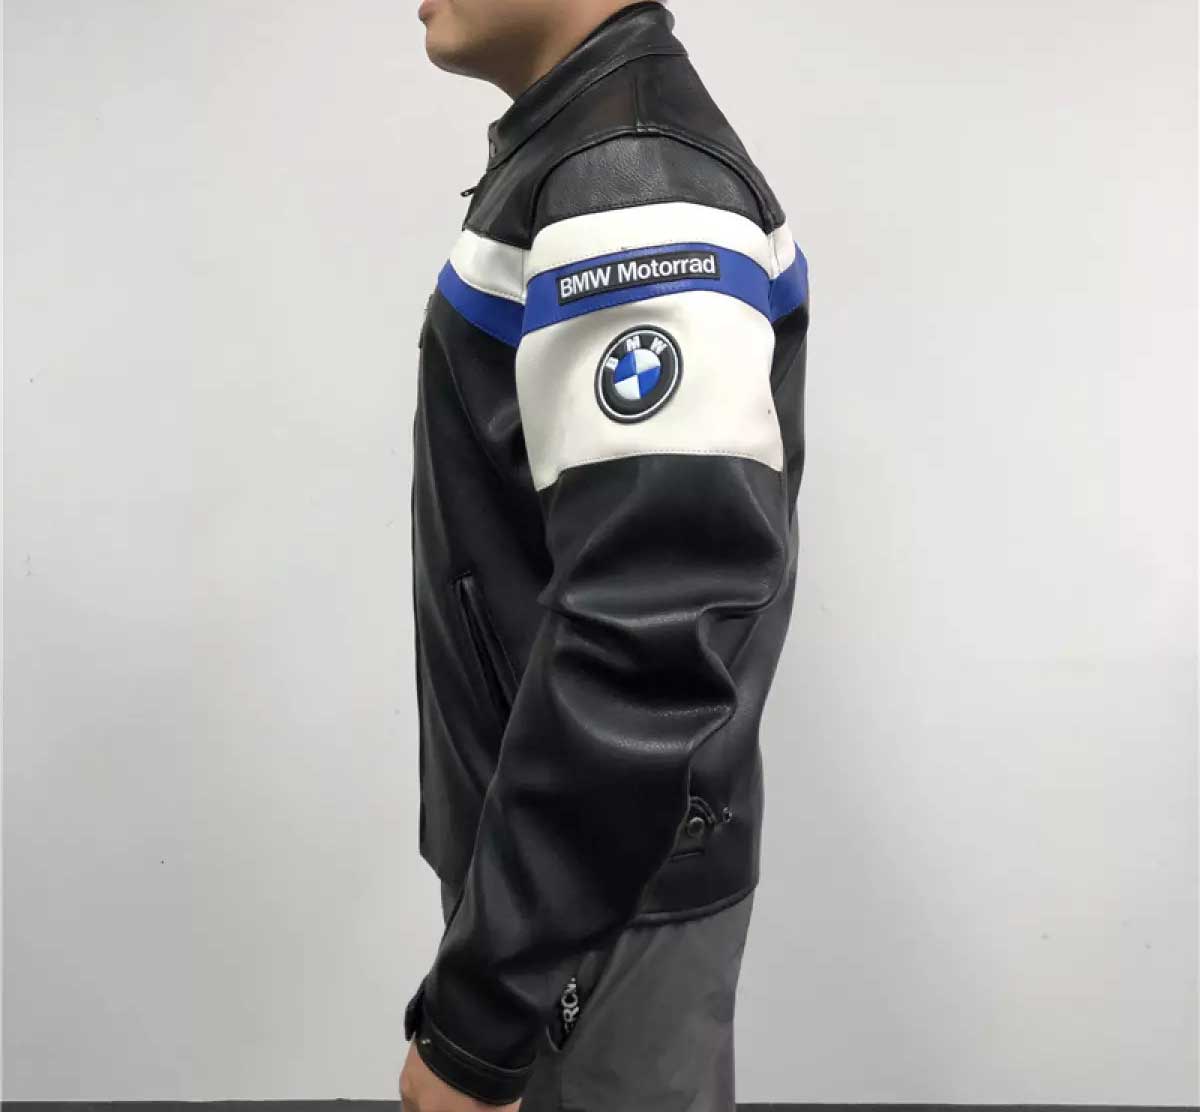 BMW Motorrad Motorcycle Black Leather Jacket - Maker of Jacket